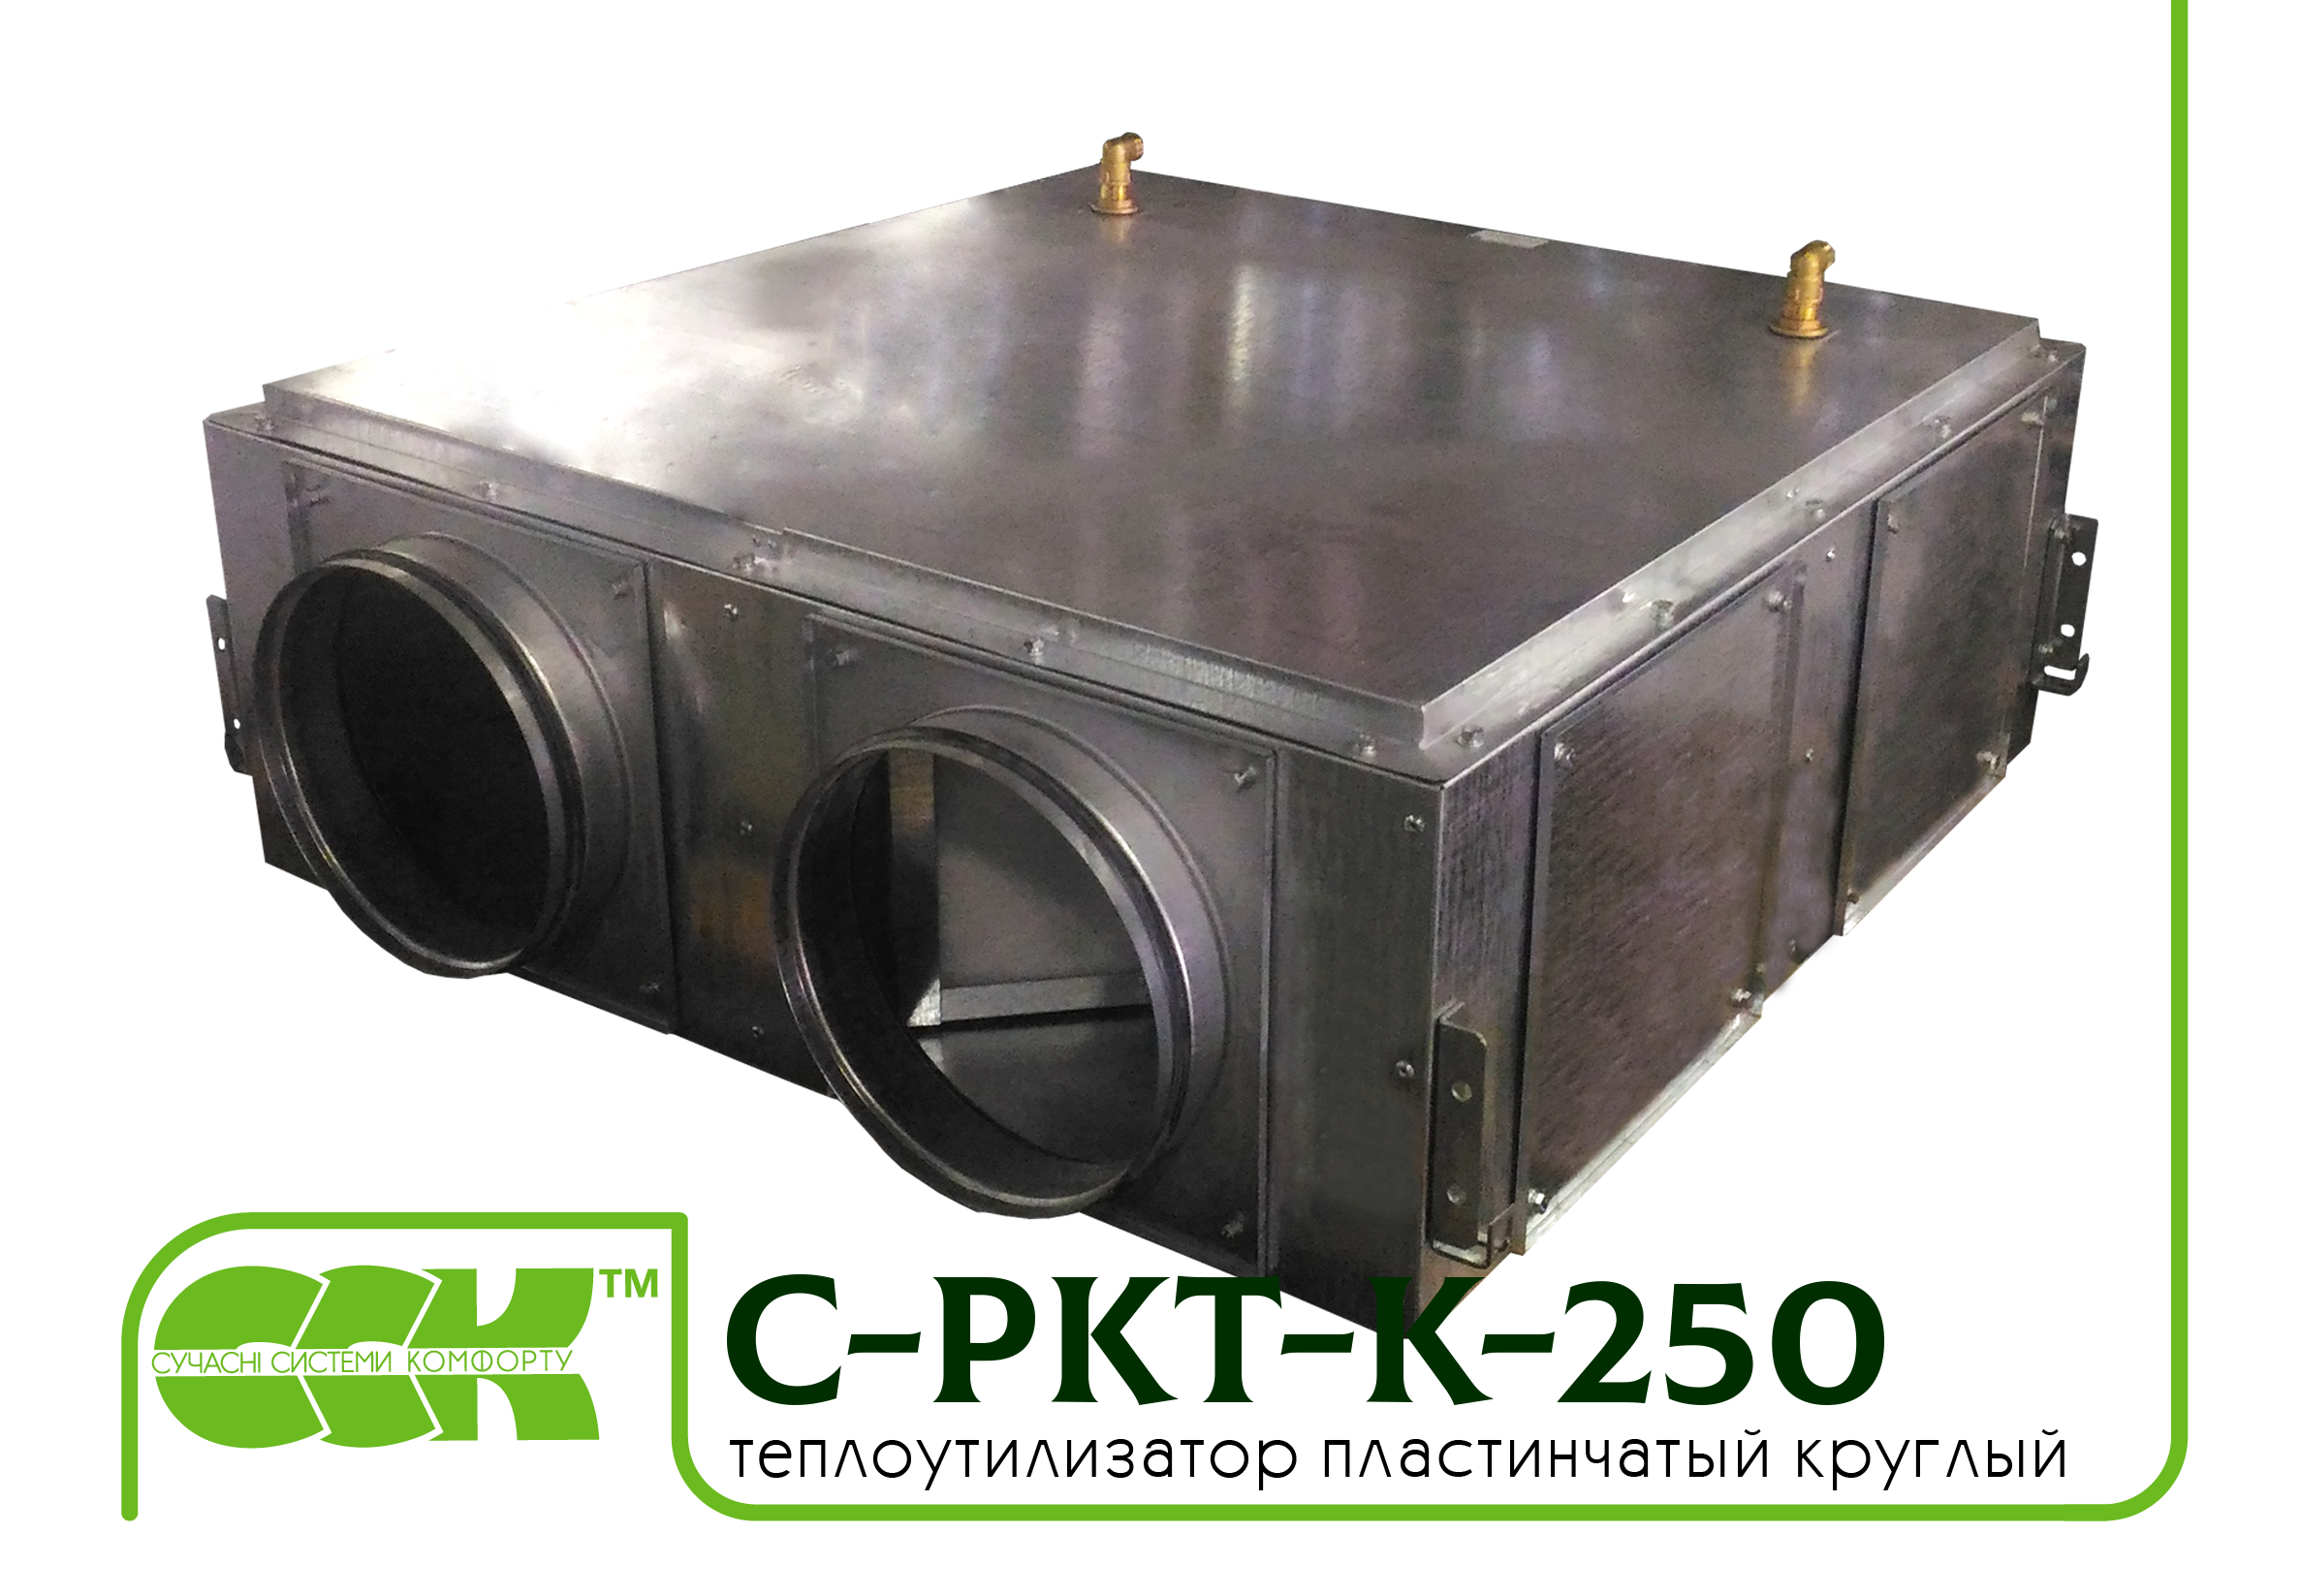 Пластинчатый теплоутилизатор для круглых каналов C-PKT-K-250